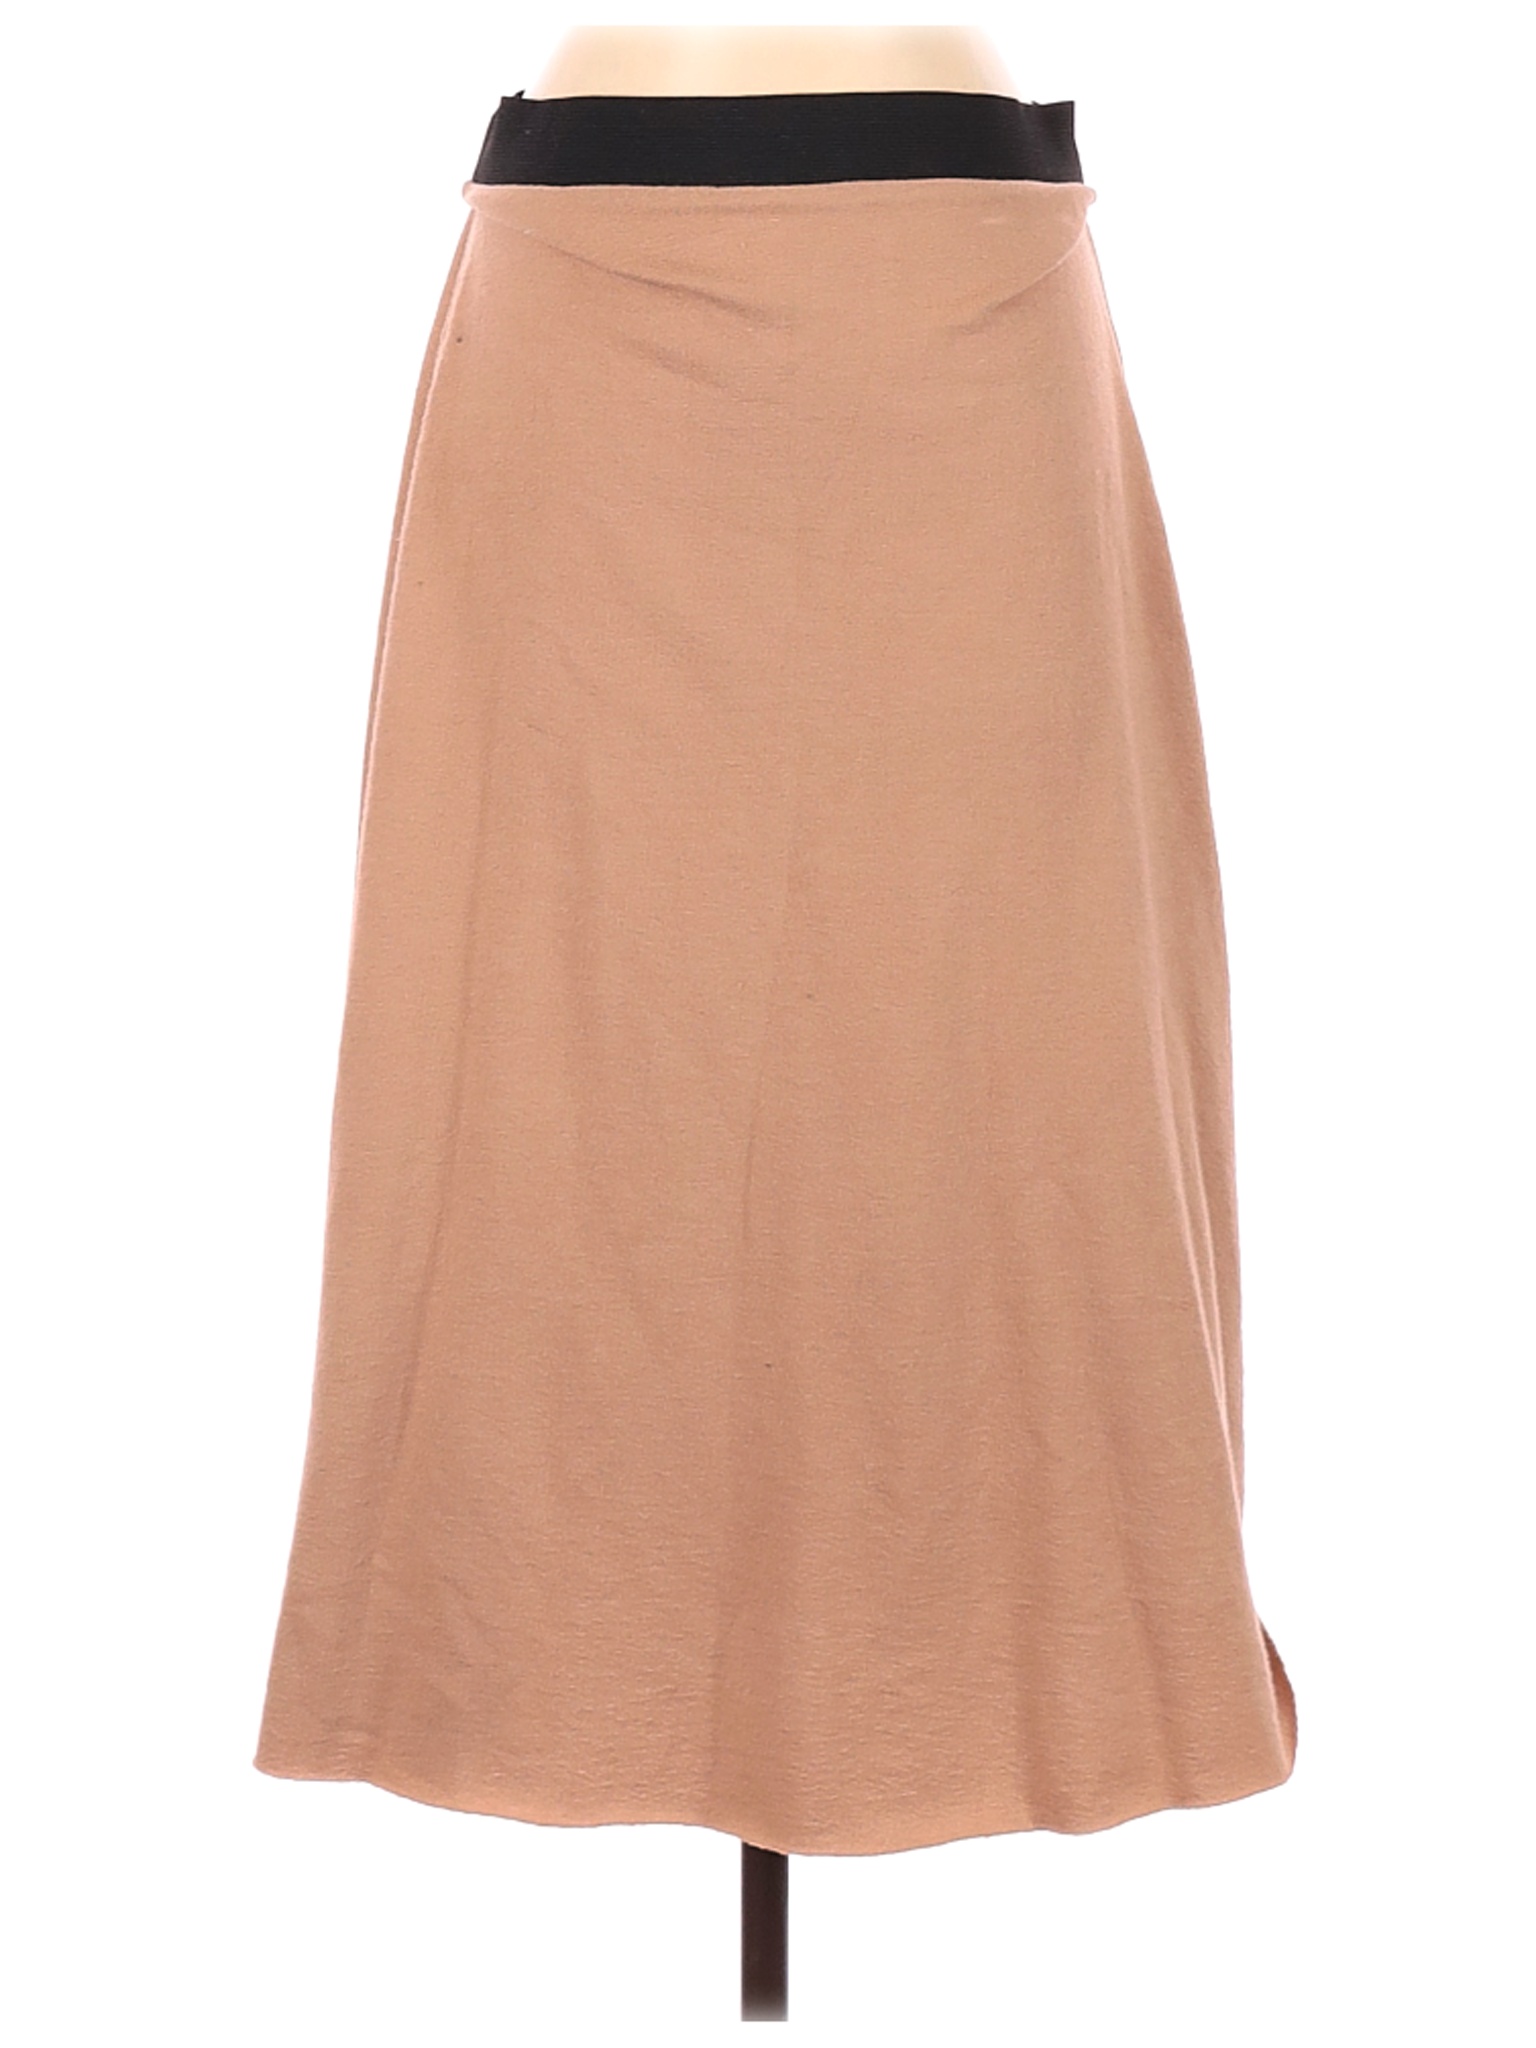 Zara Women Brown Casual Skirt S | eBay